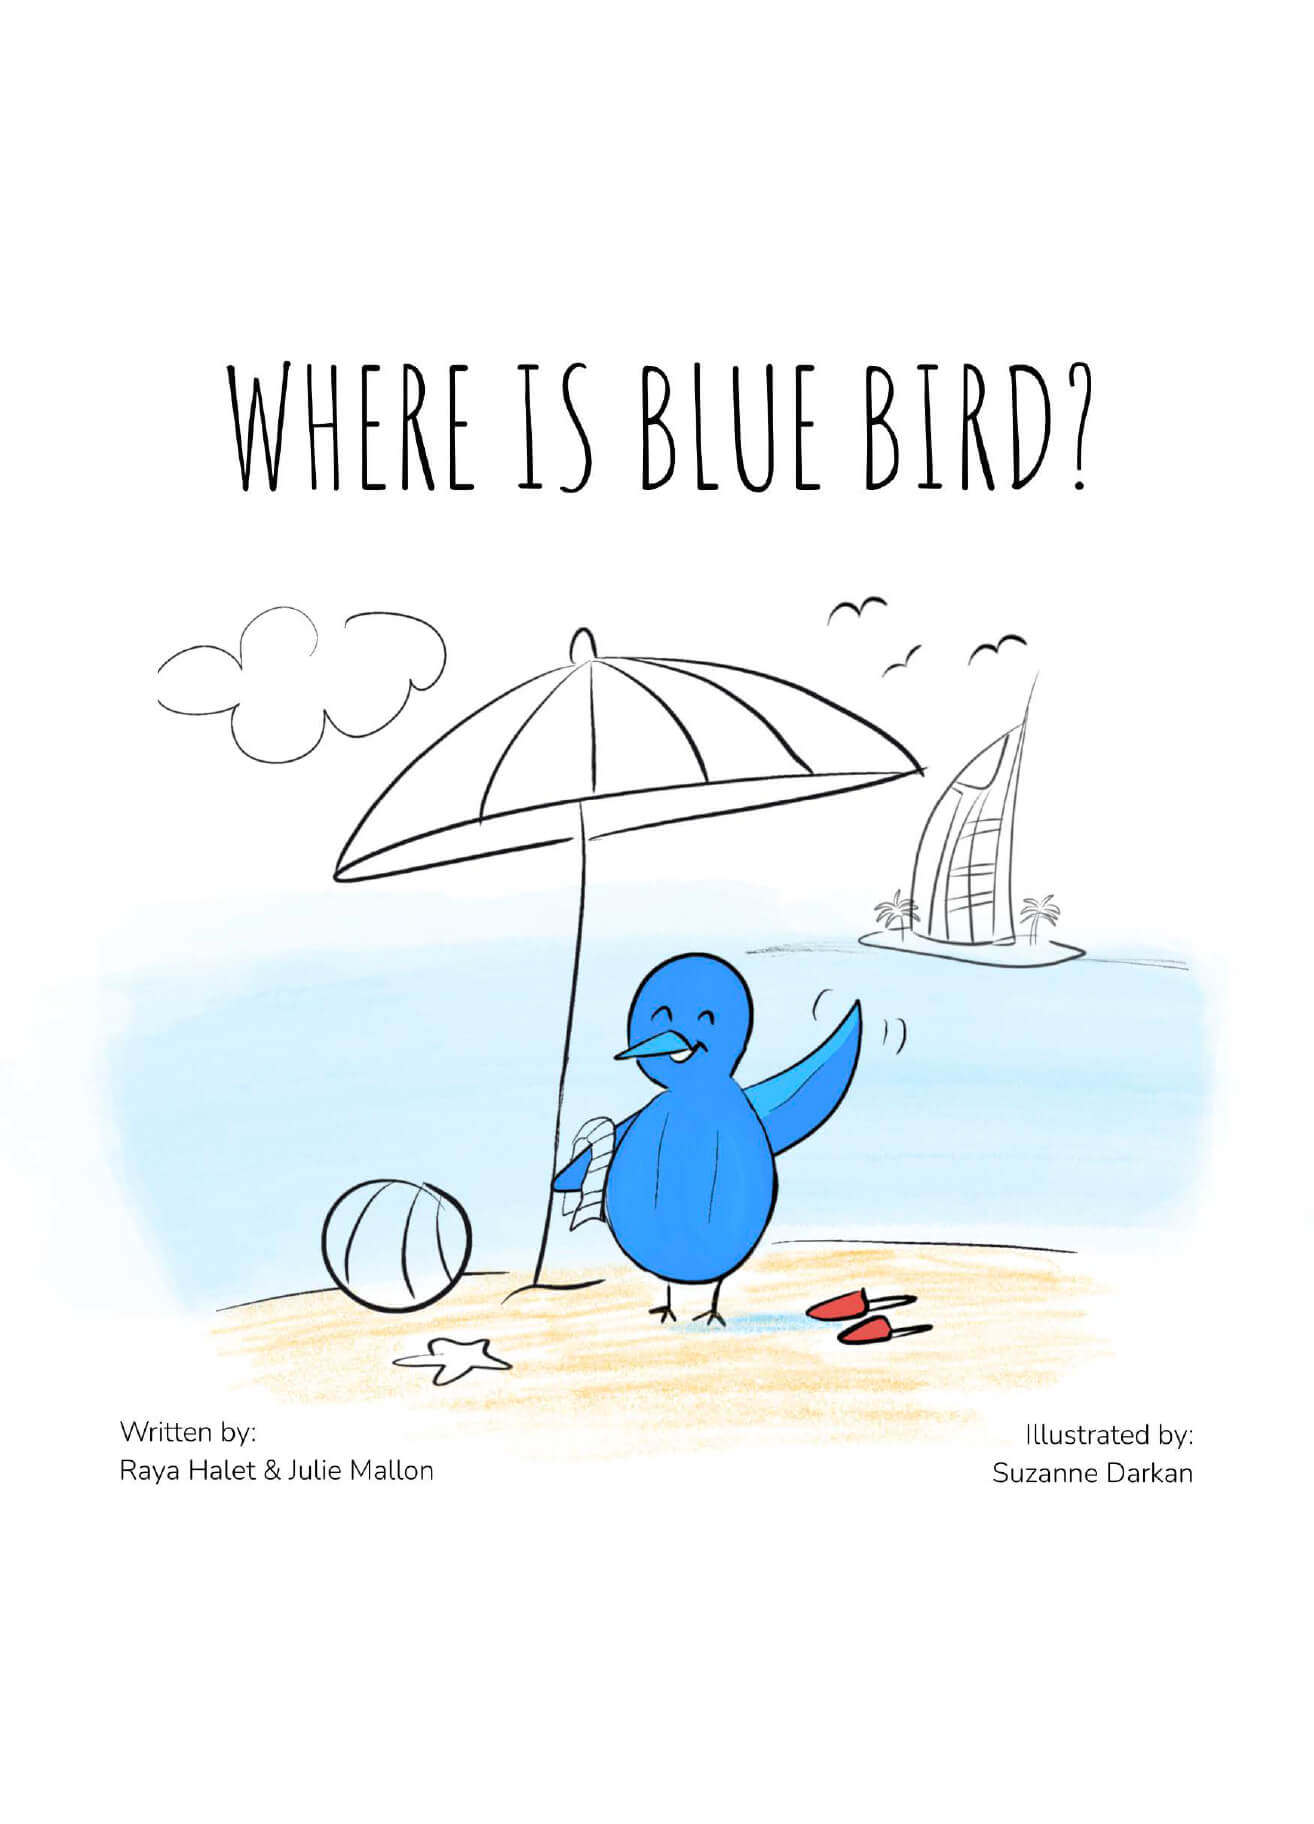 WHERE IS BLUE BIRD